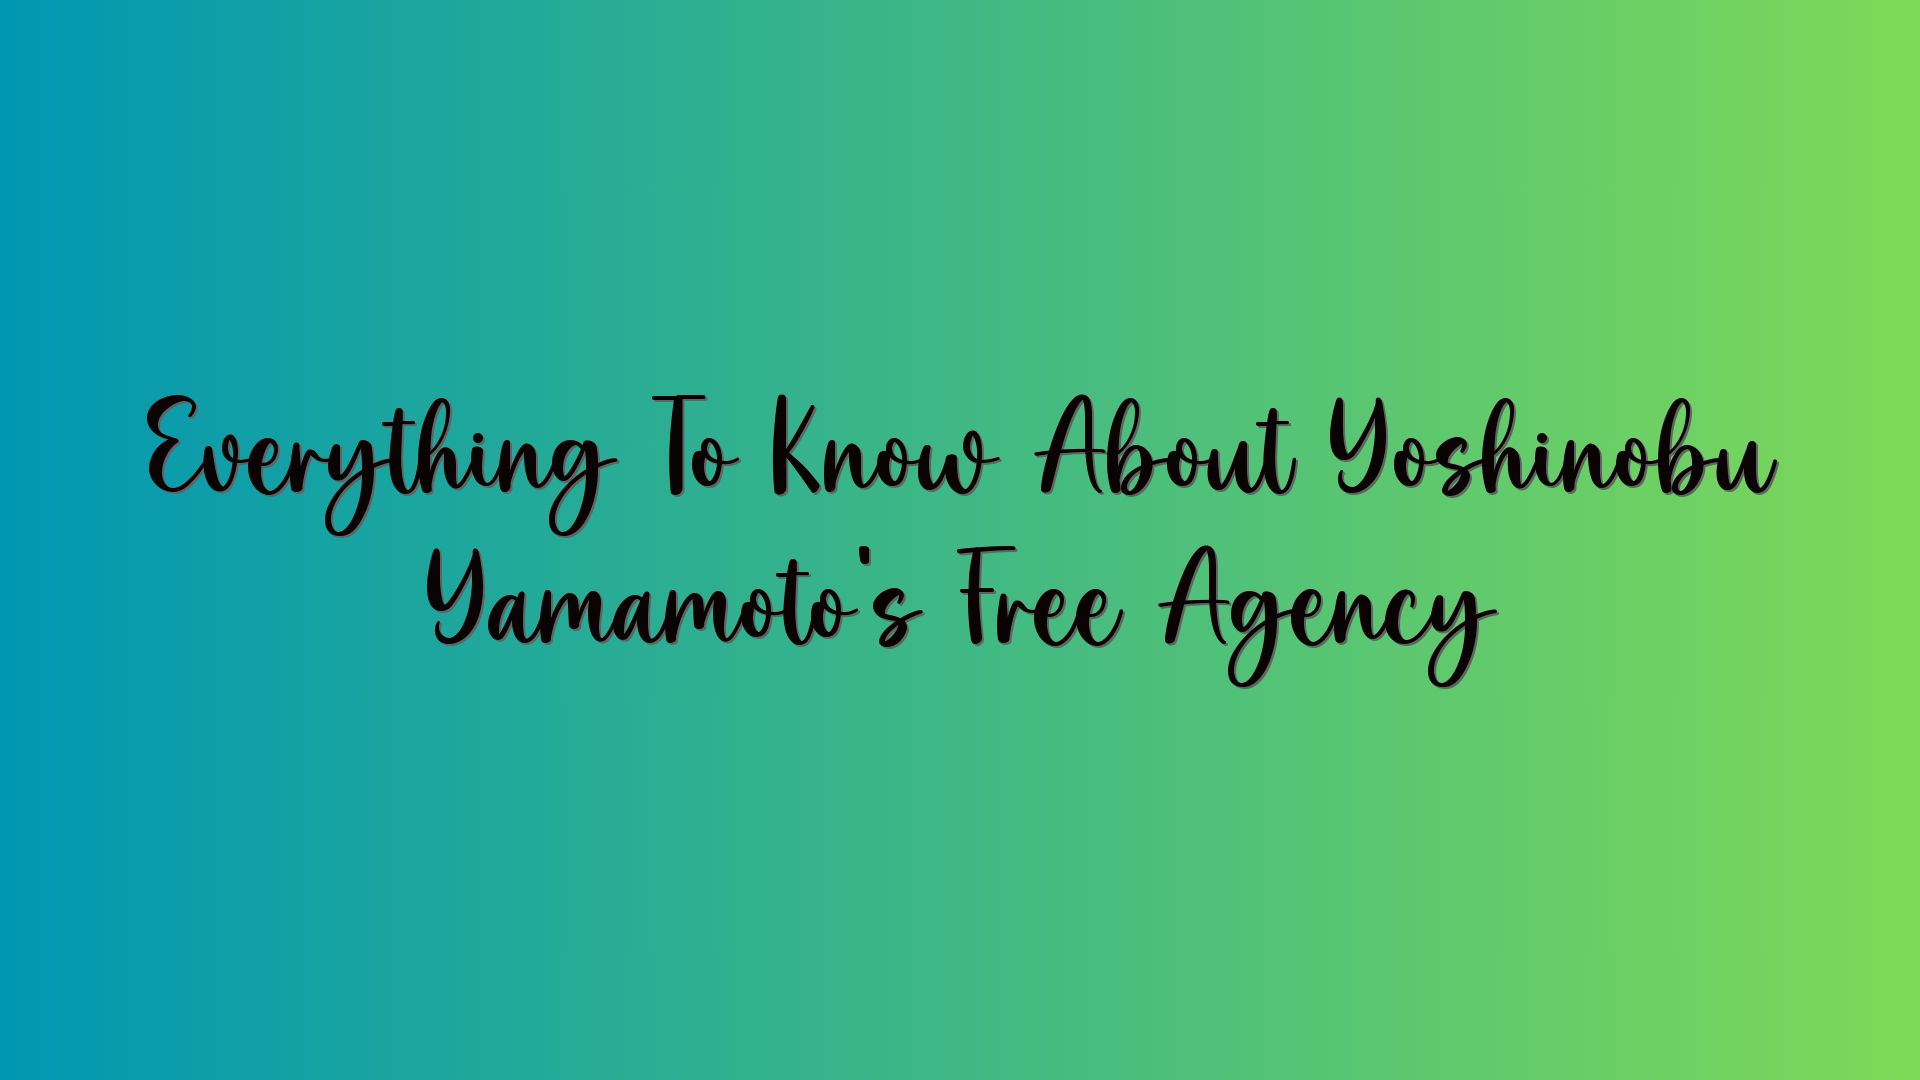 Everything To Know About Yoshinobu Yamamoto’s Free Agency